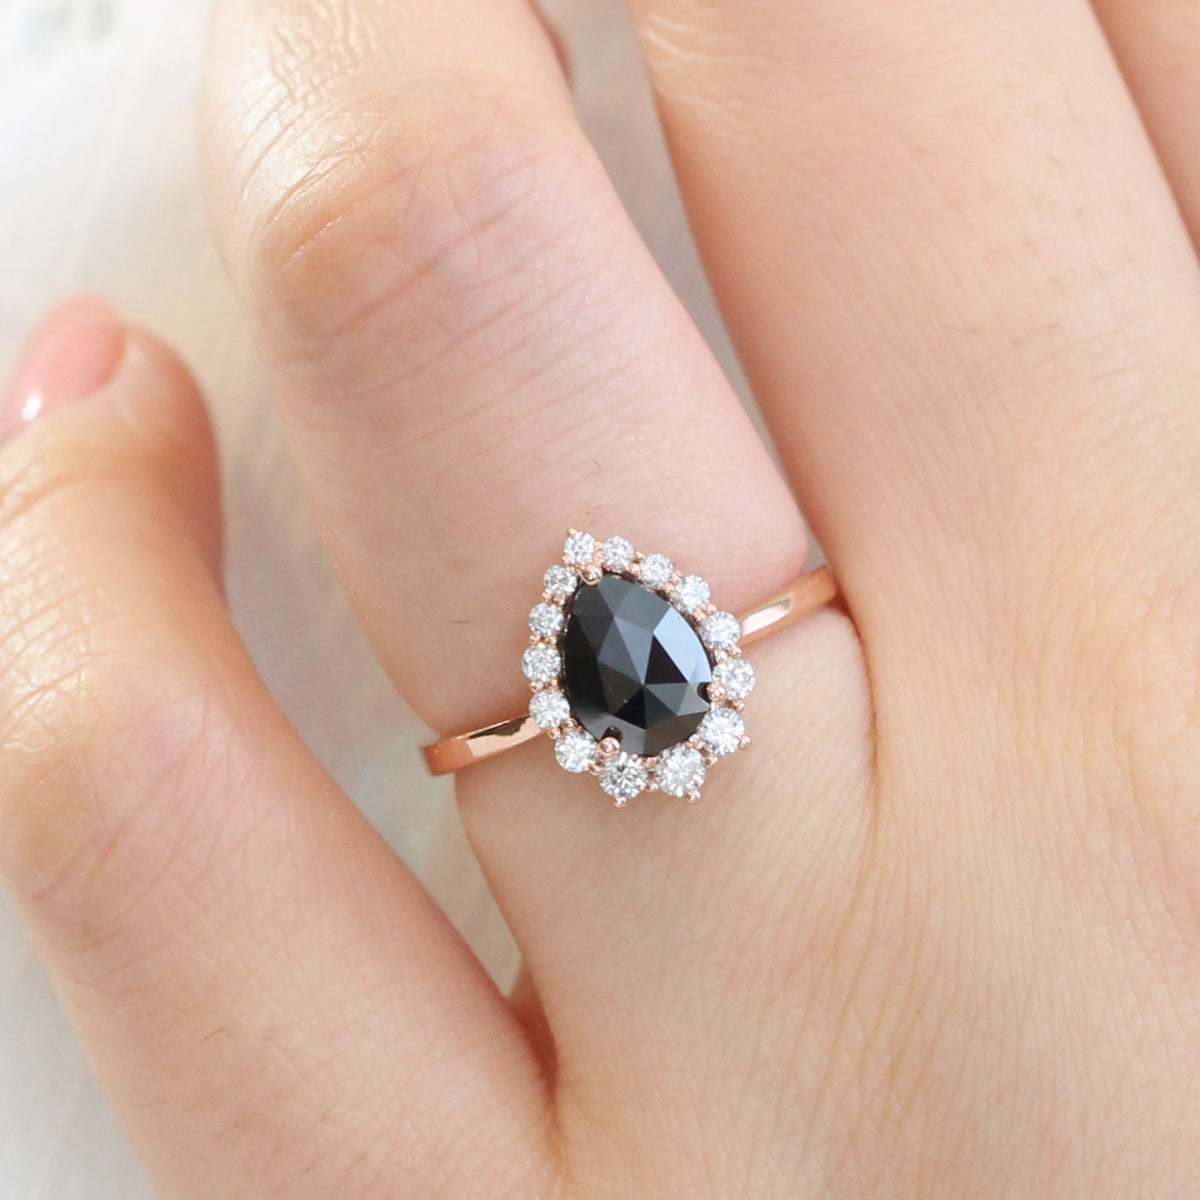 rose cut black diamond ring gold halo pear ring la more design jewelry